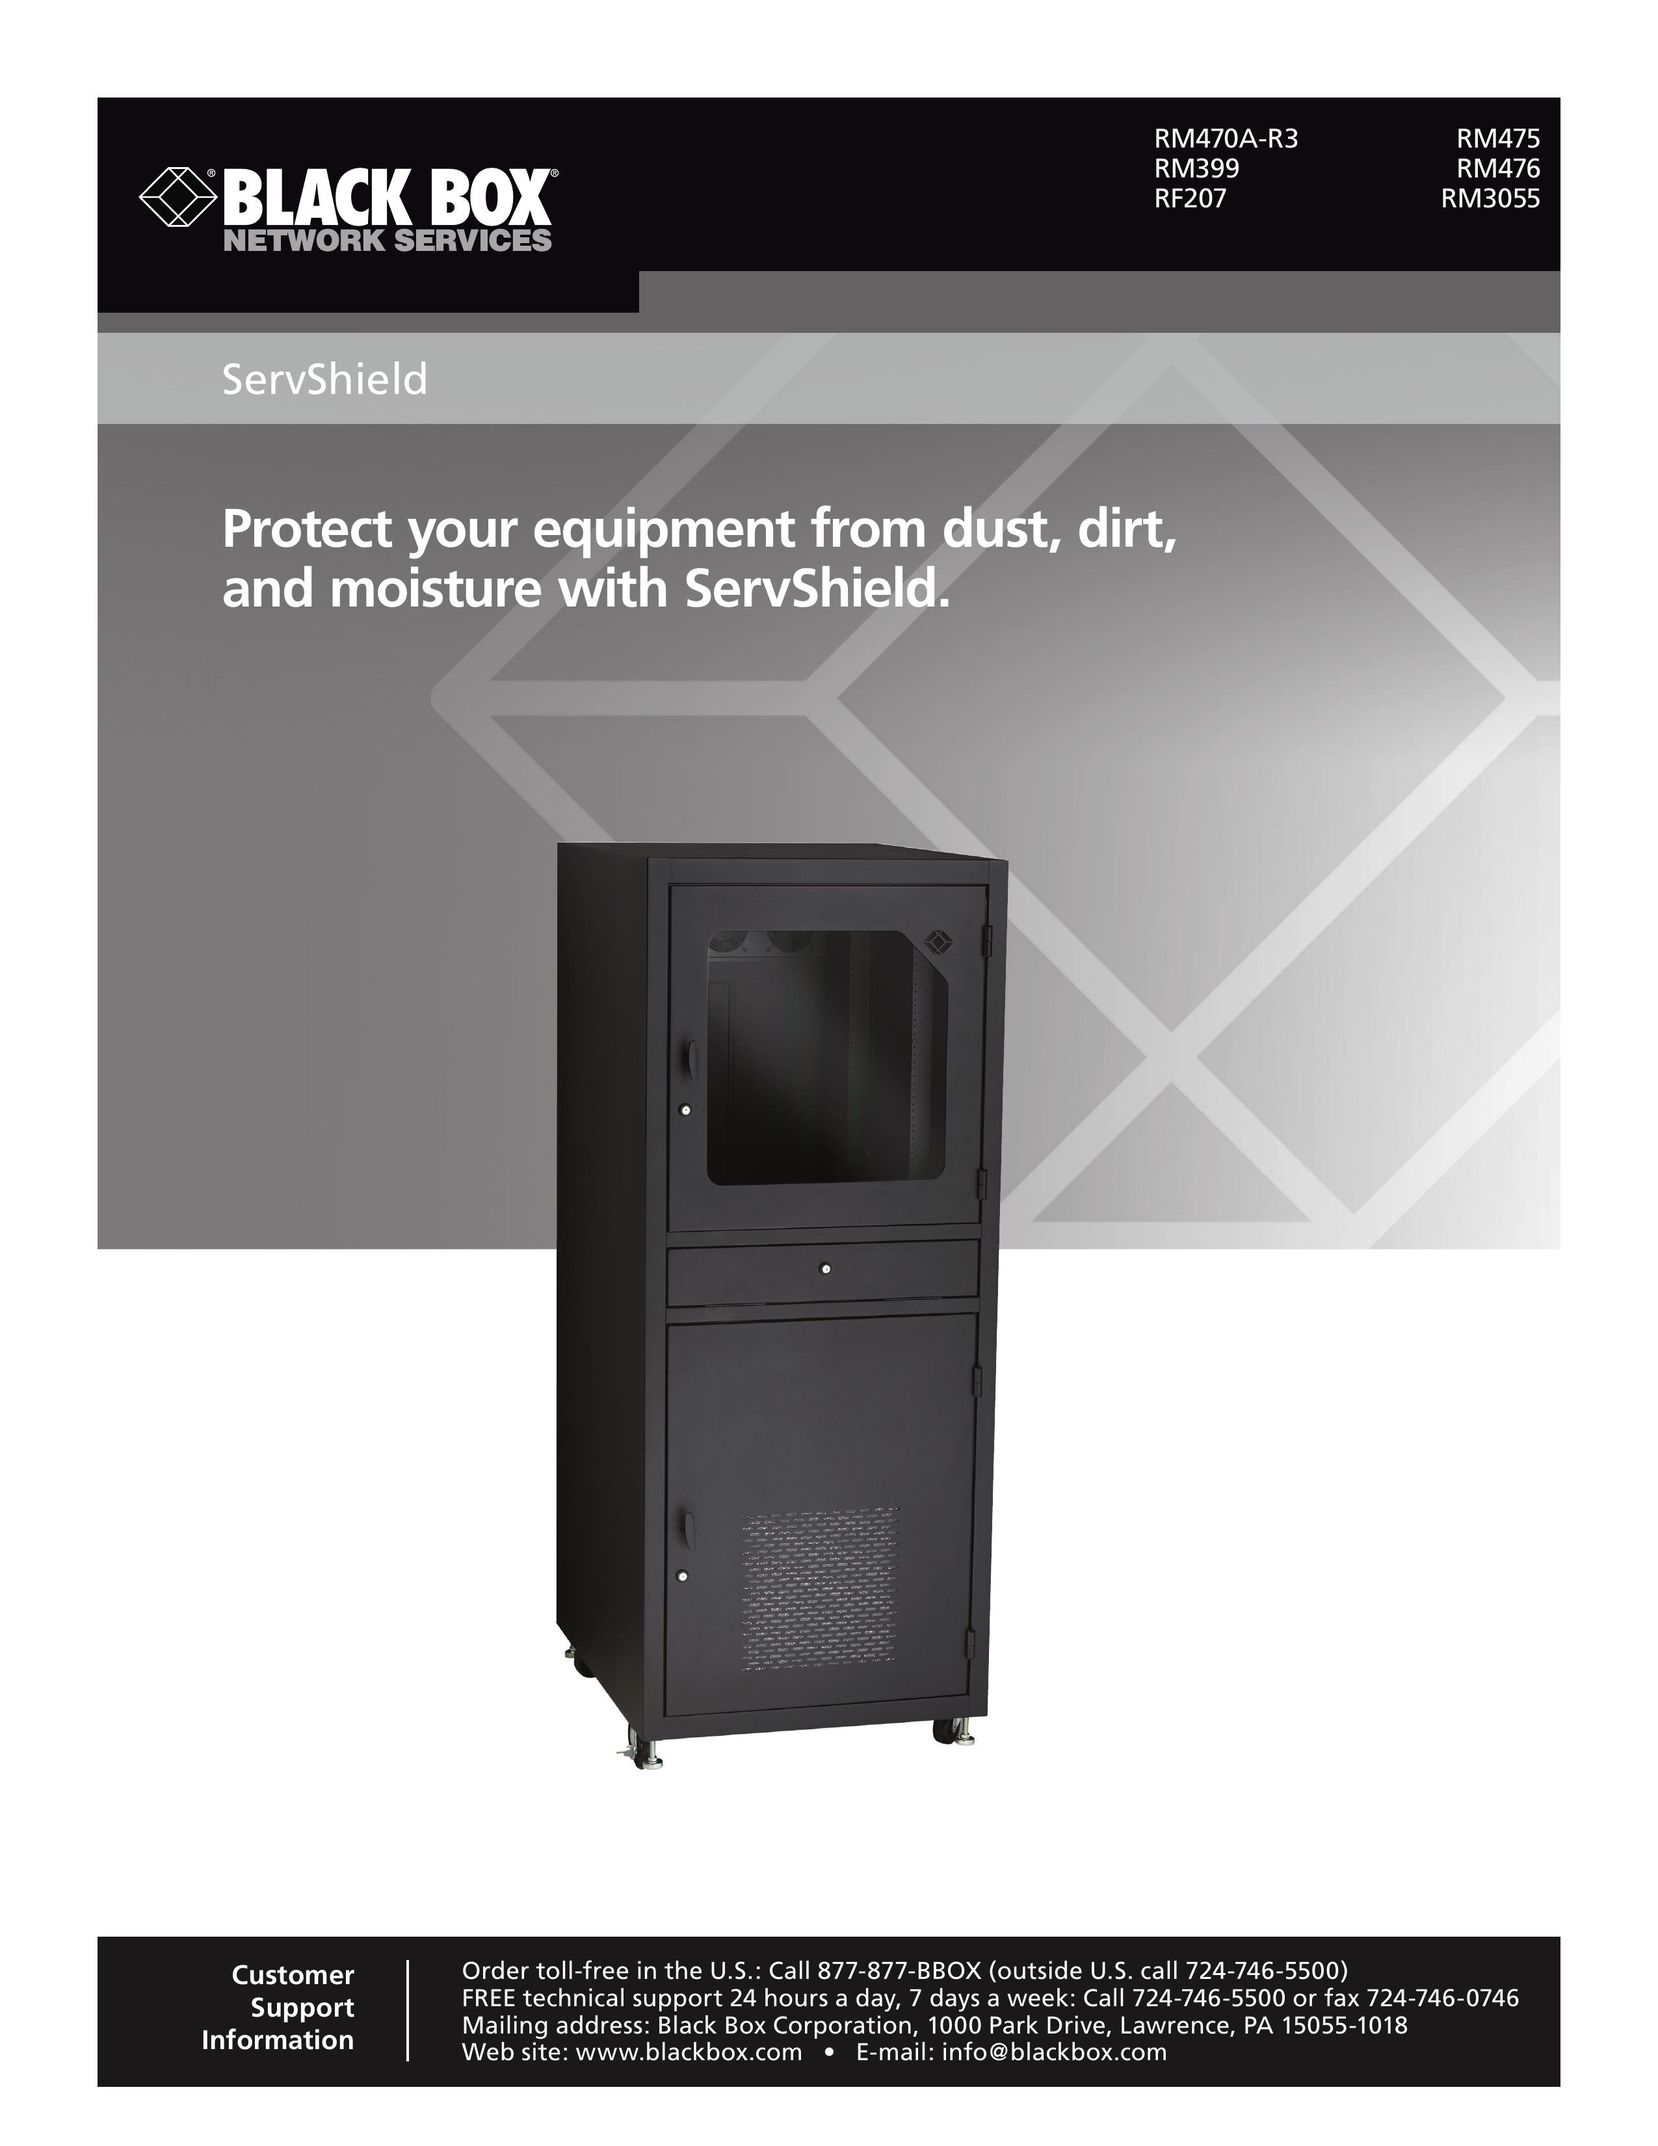 Black Box RM470A-R3 Home Theater Server User Manual